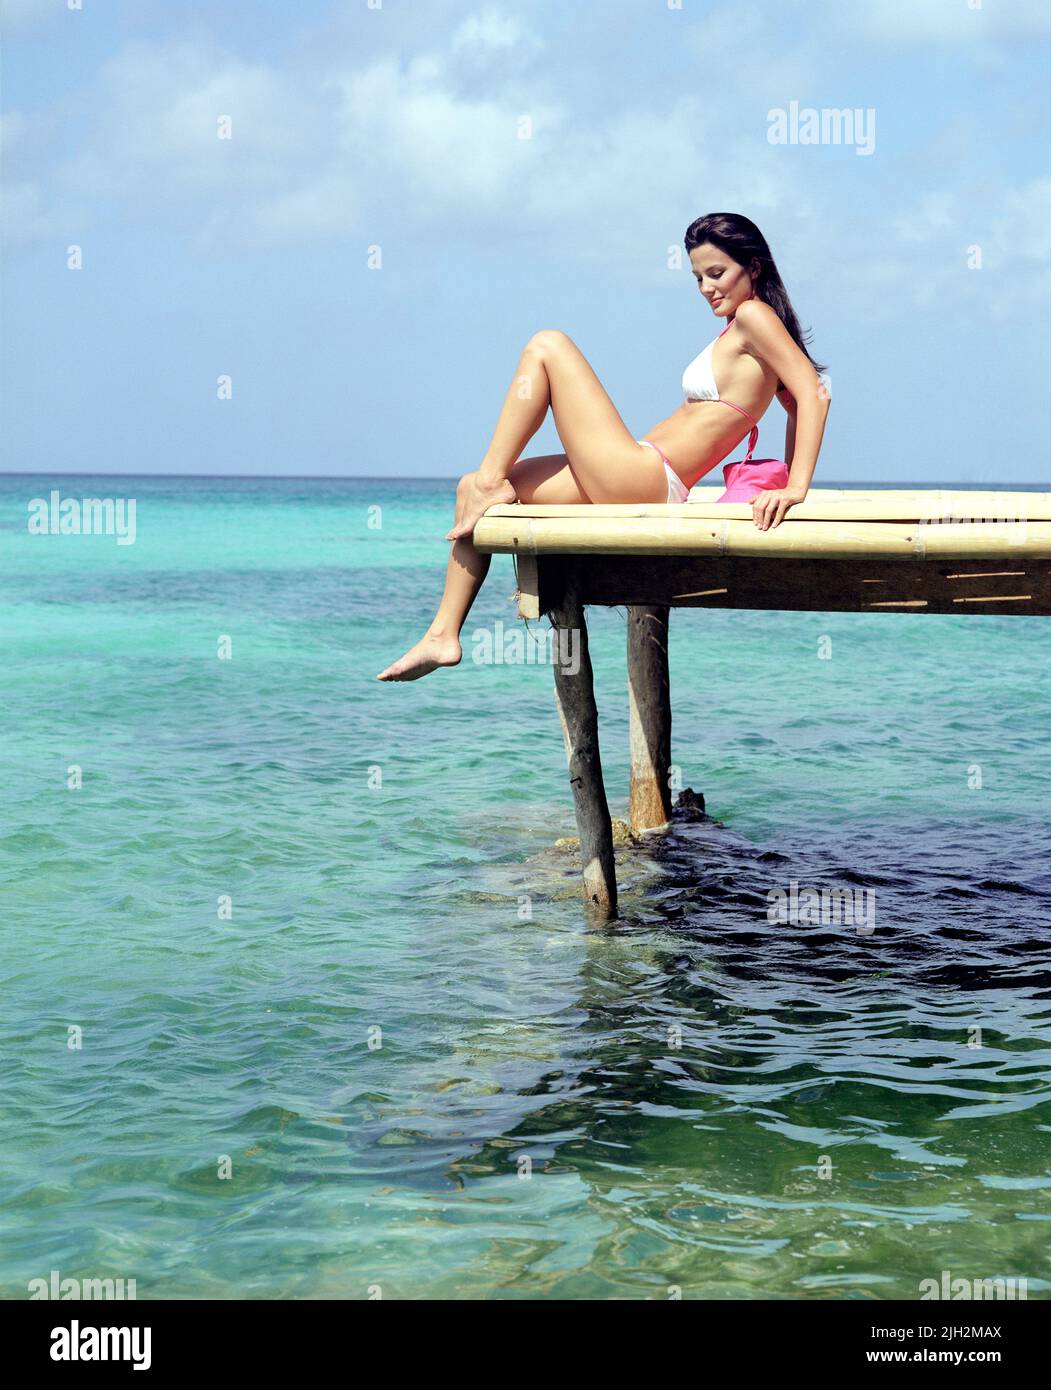 Woman in bikini sitting on bamboo dock over ocean water. Boracay, Philippines. Stock Photo